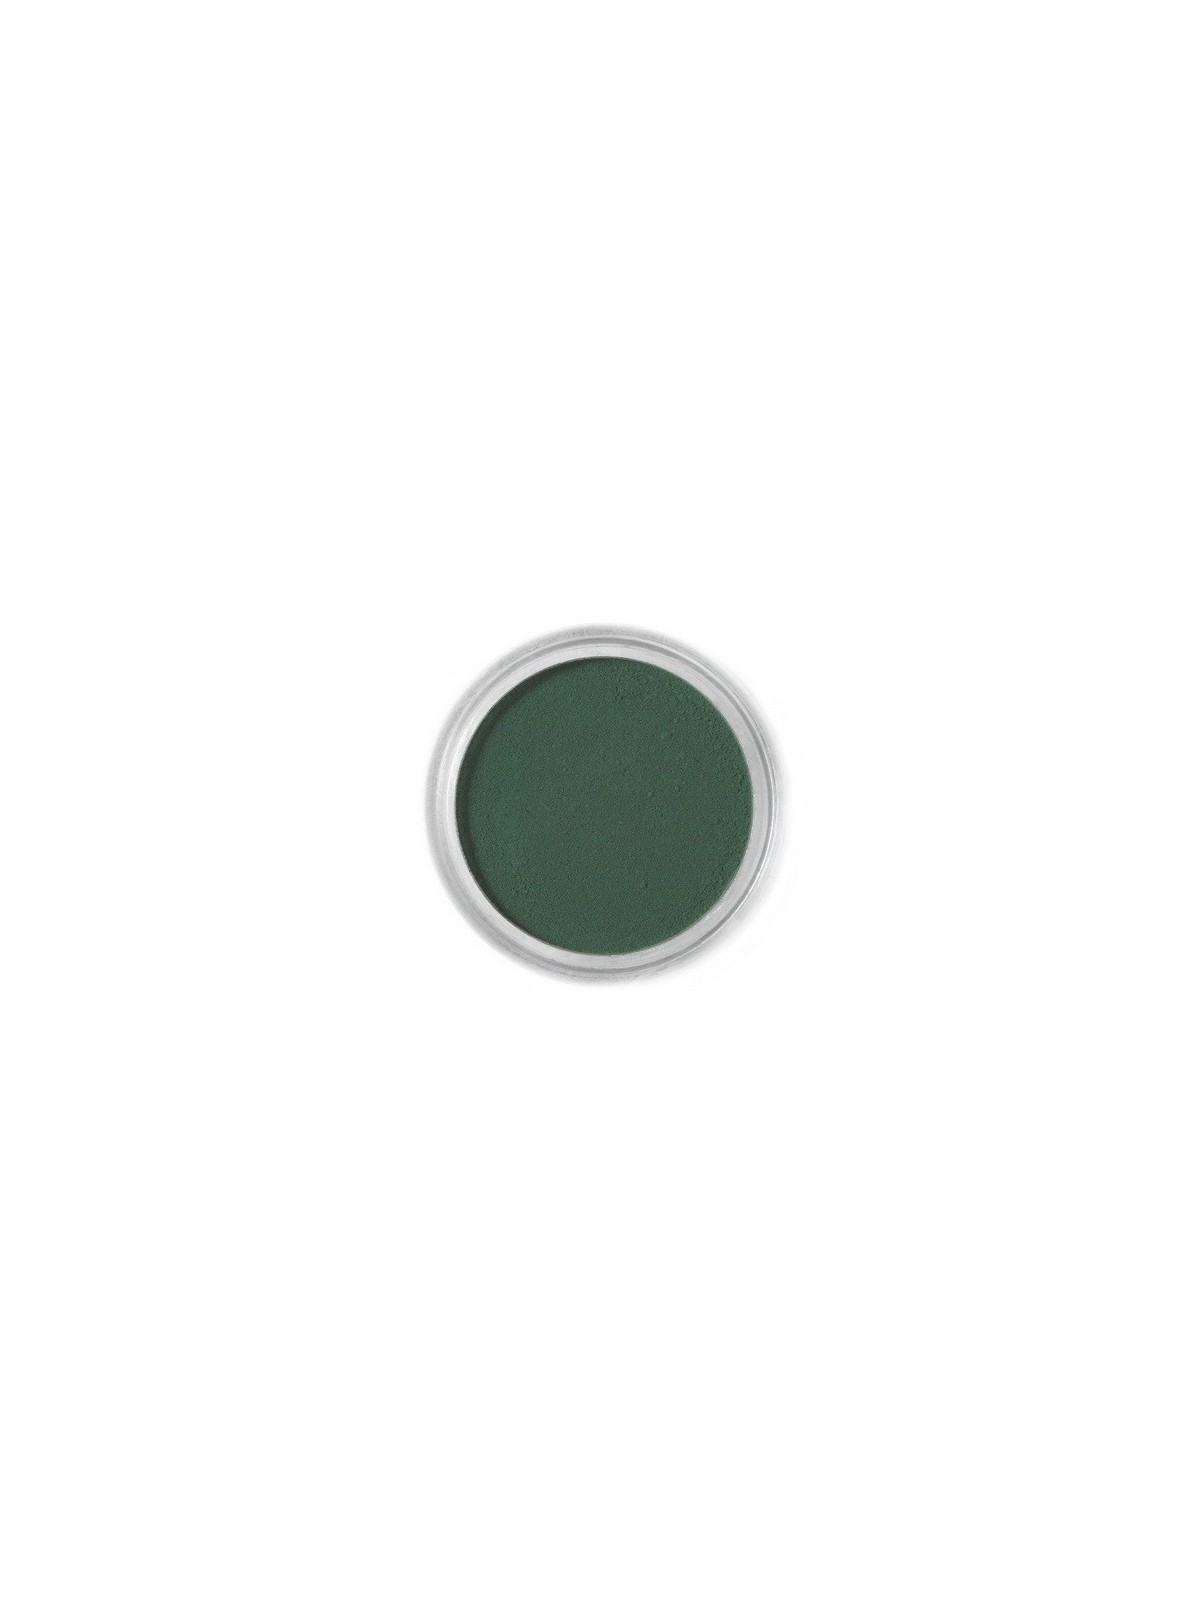 Jedlá prachová farba Fractal - Dark Green, Sötét zöld (1,5 g)